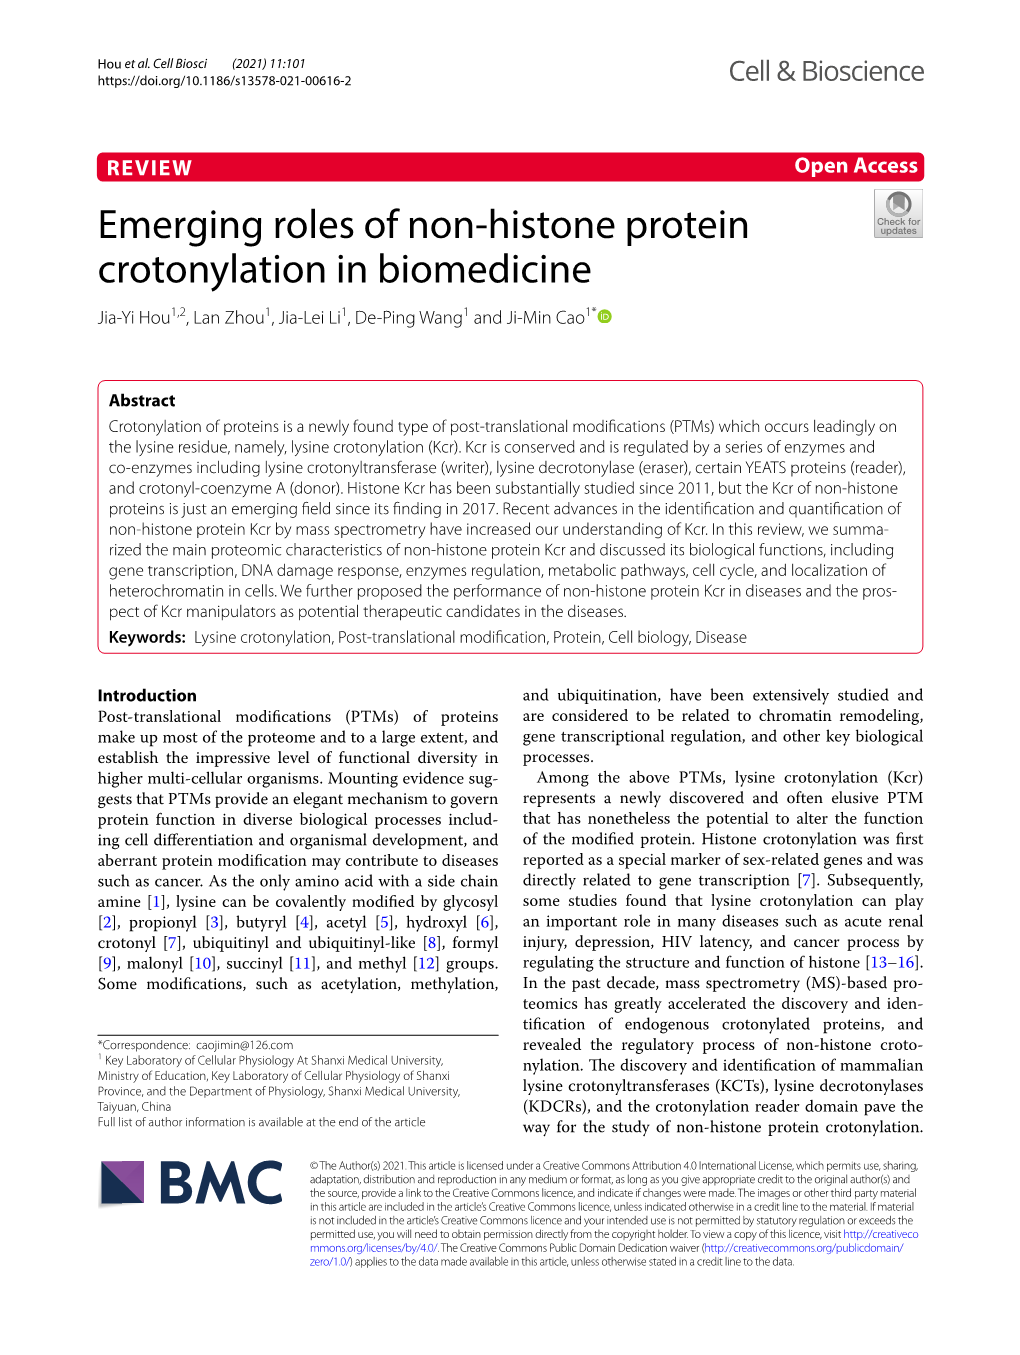 Emerging Roles of Non-Histone Protein Crotonylation in Biomedicine